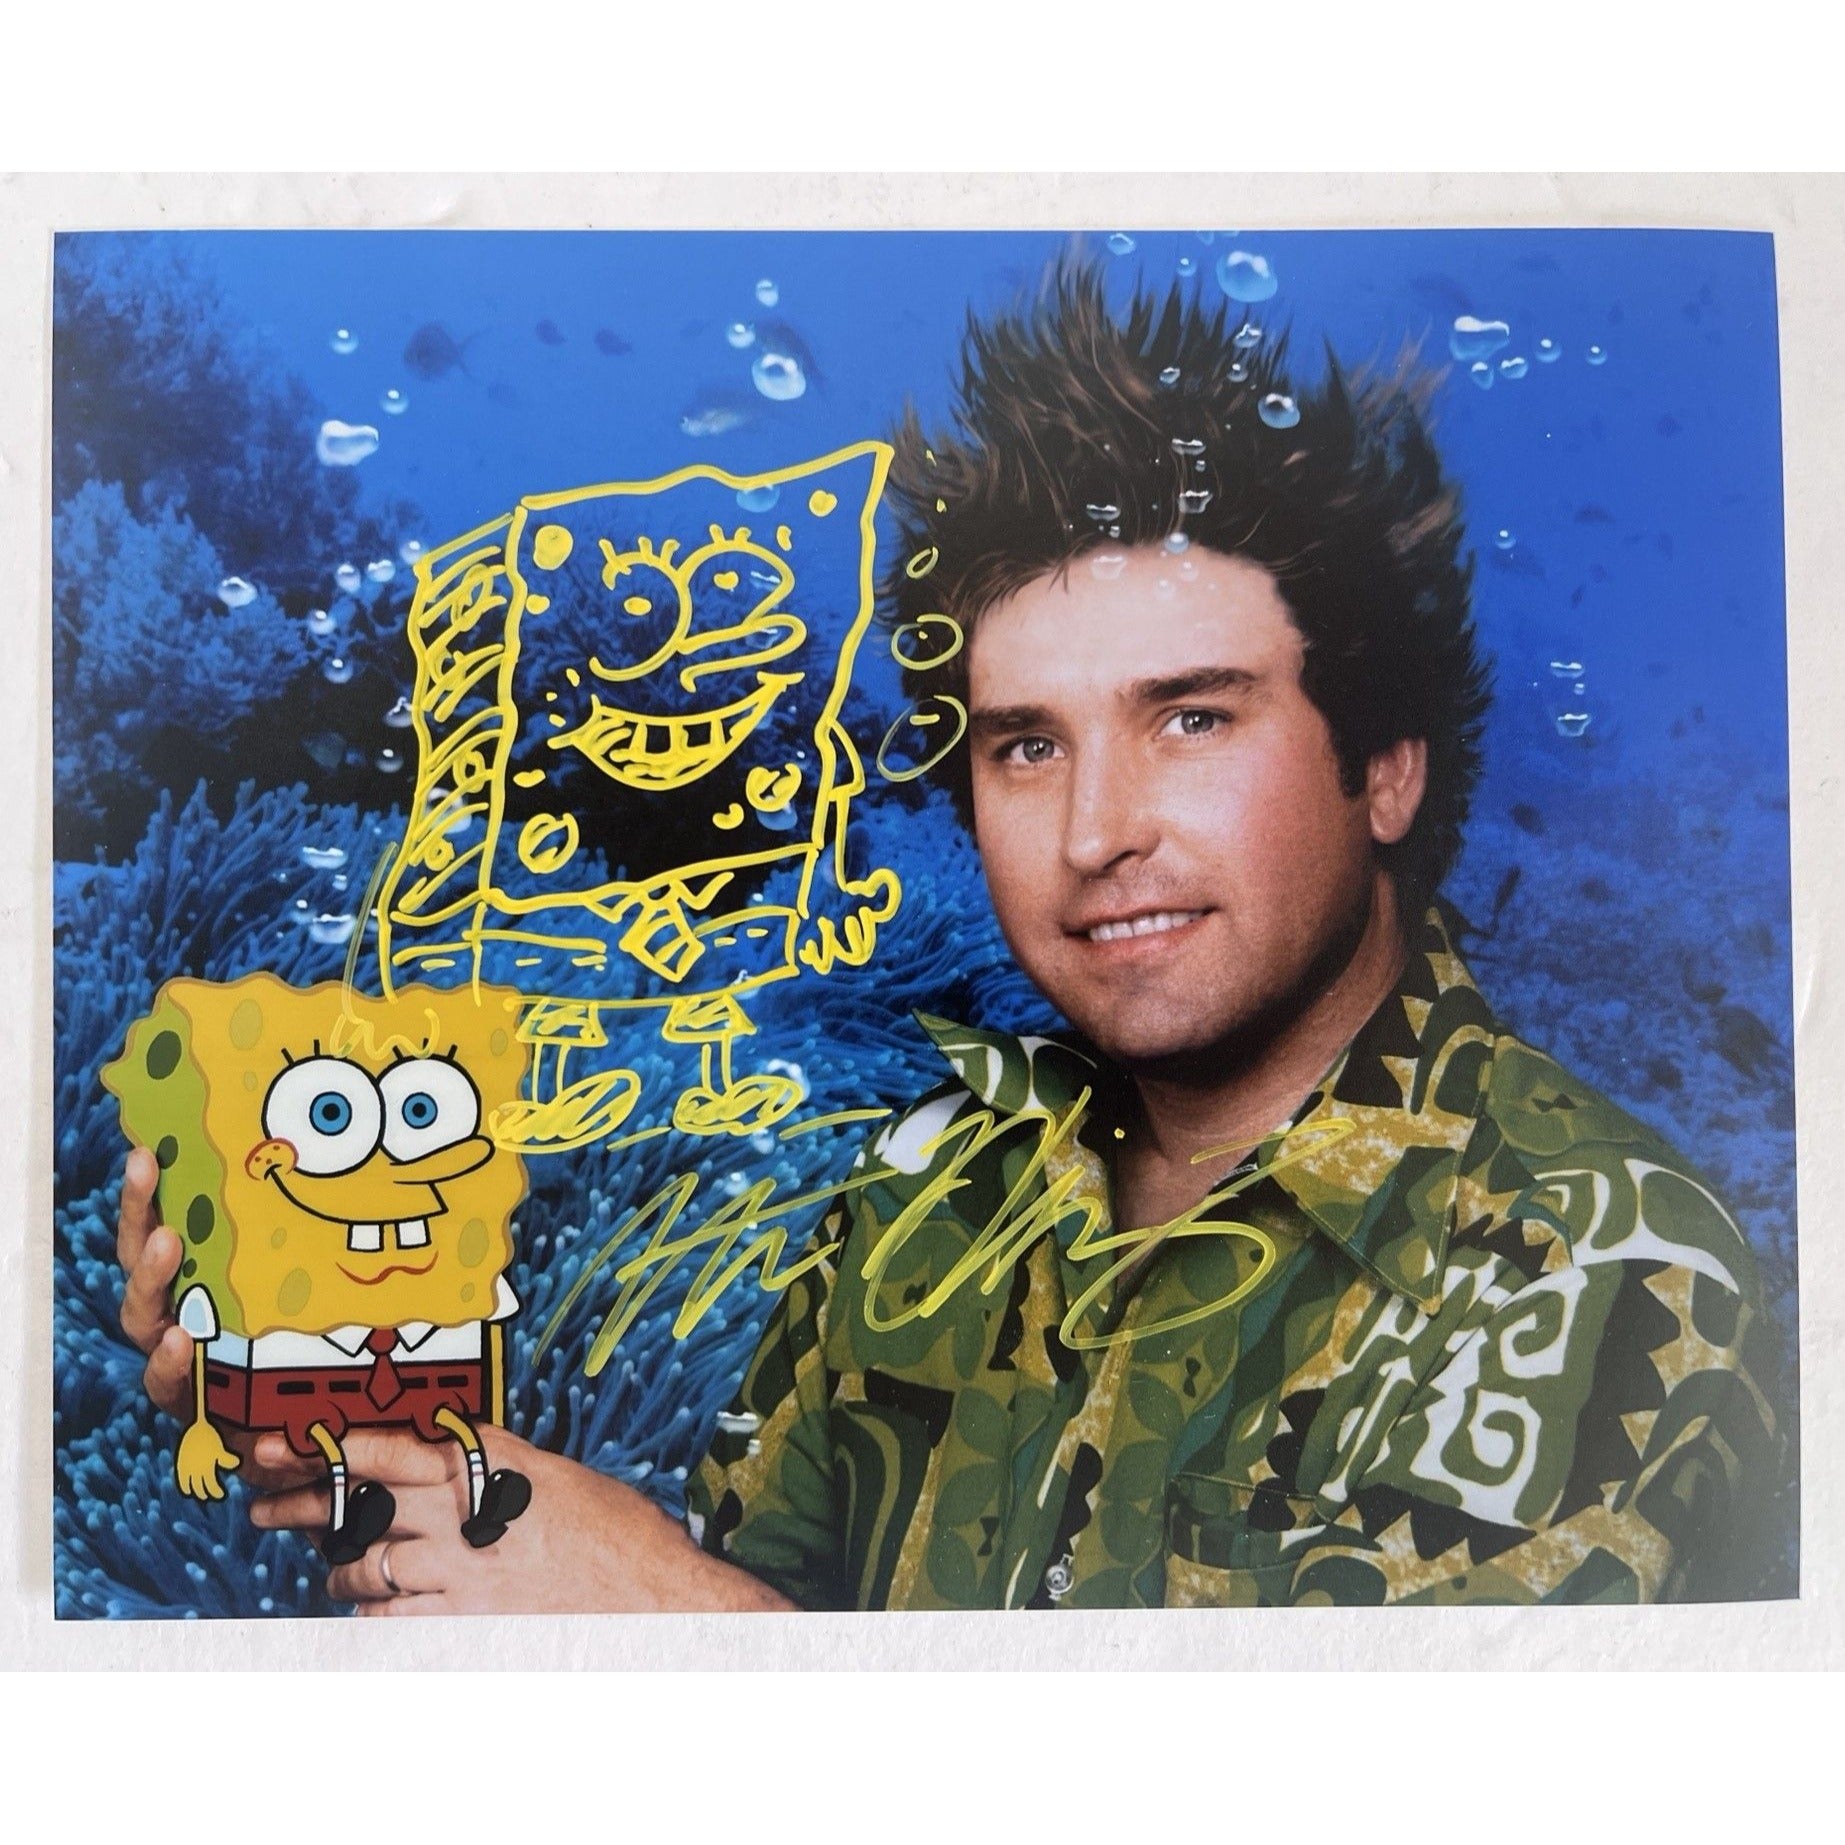 Steven Hillenburg SpongeBob creator sketch and signed 8x10 photo